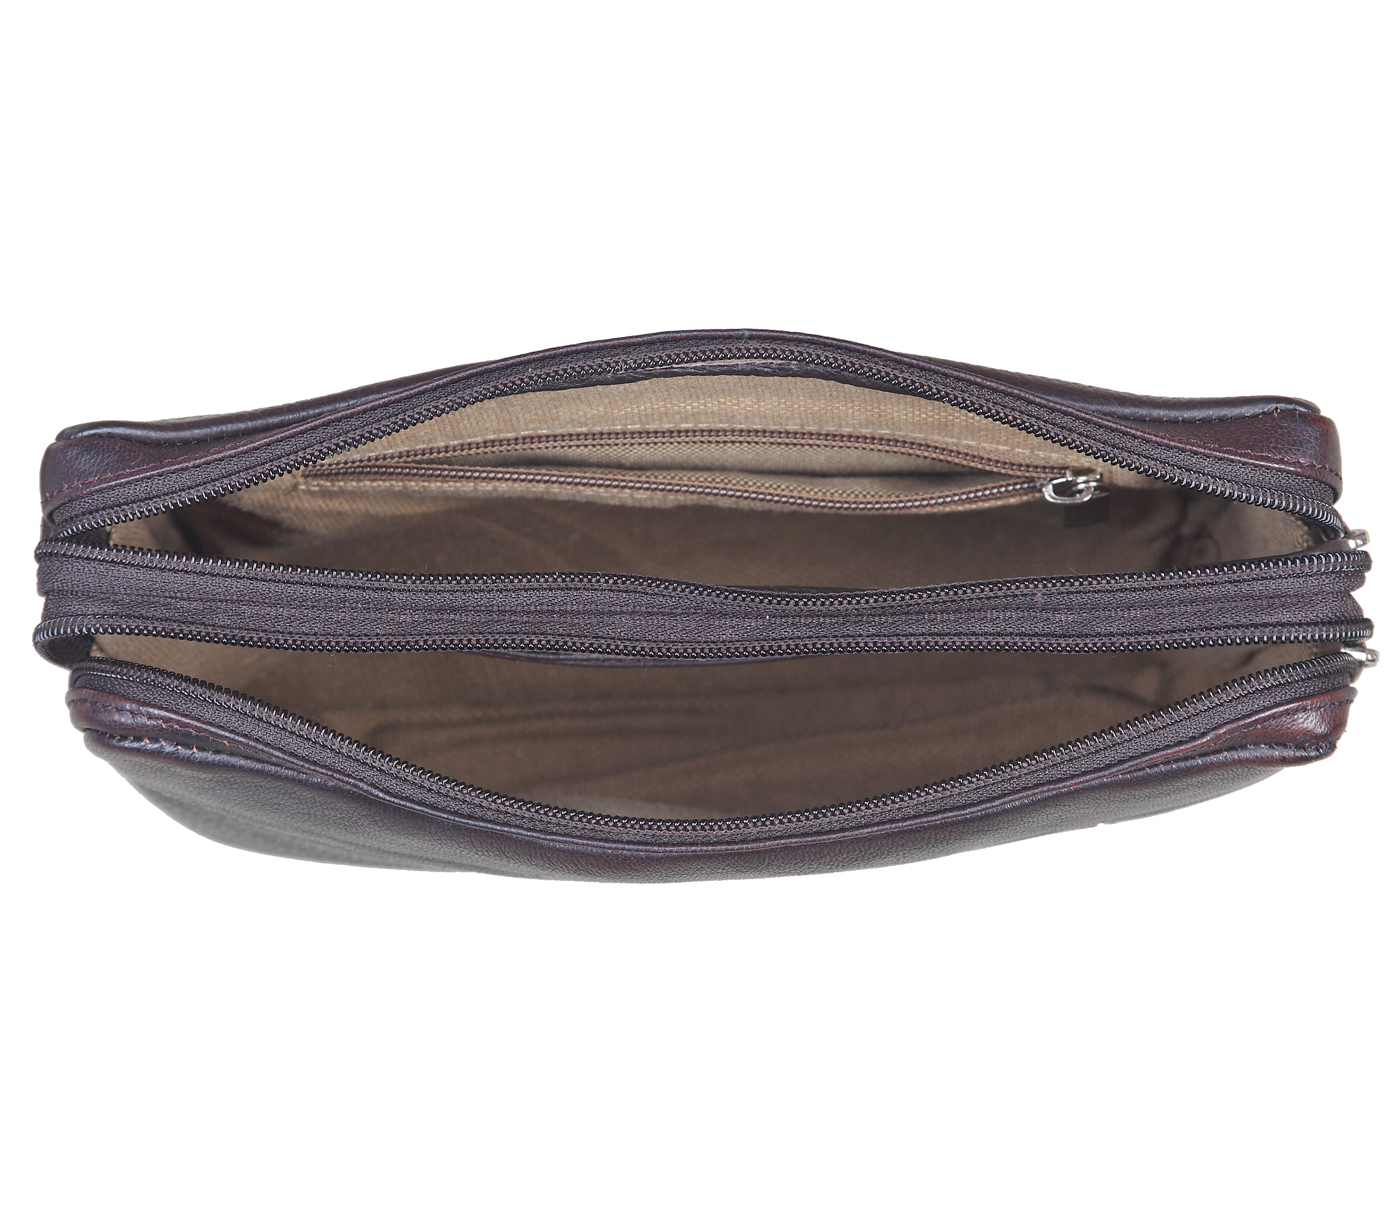 P20-Fernando-Men's bag cum travel pouch in Genuine Leather - Brown